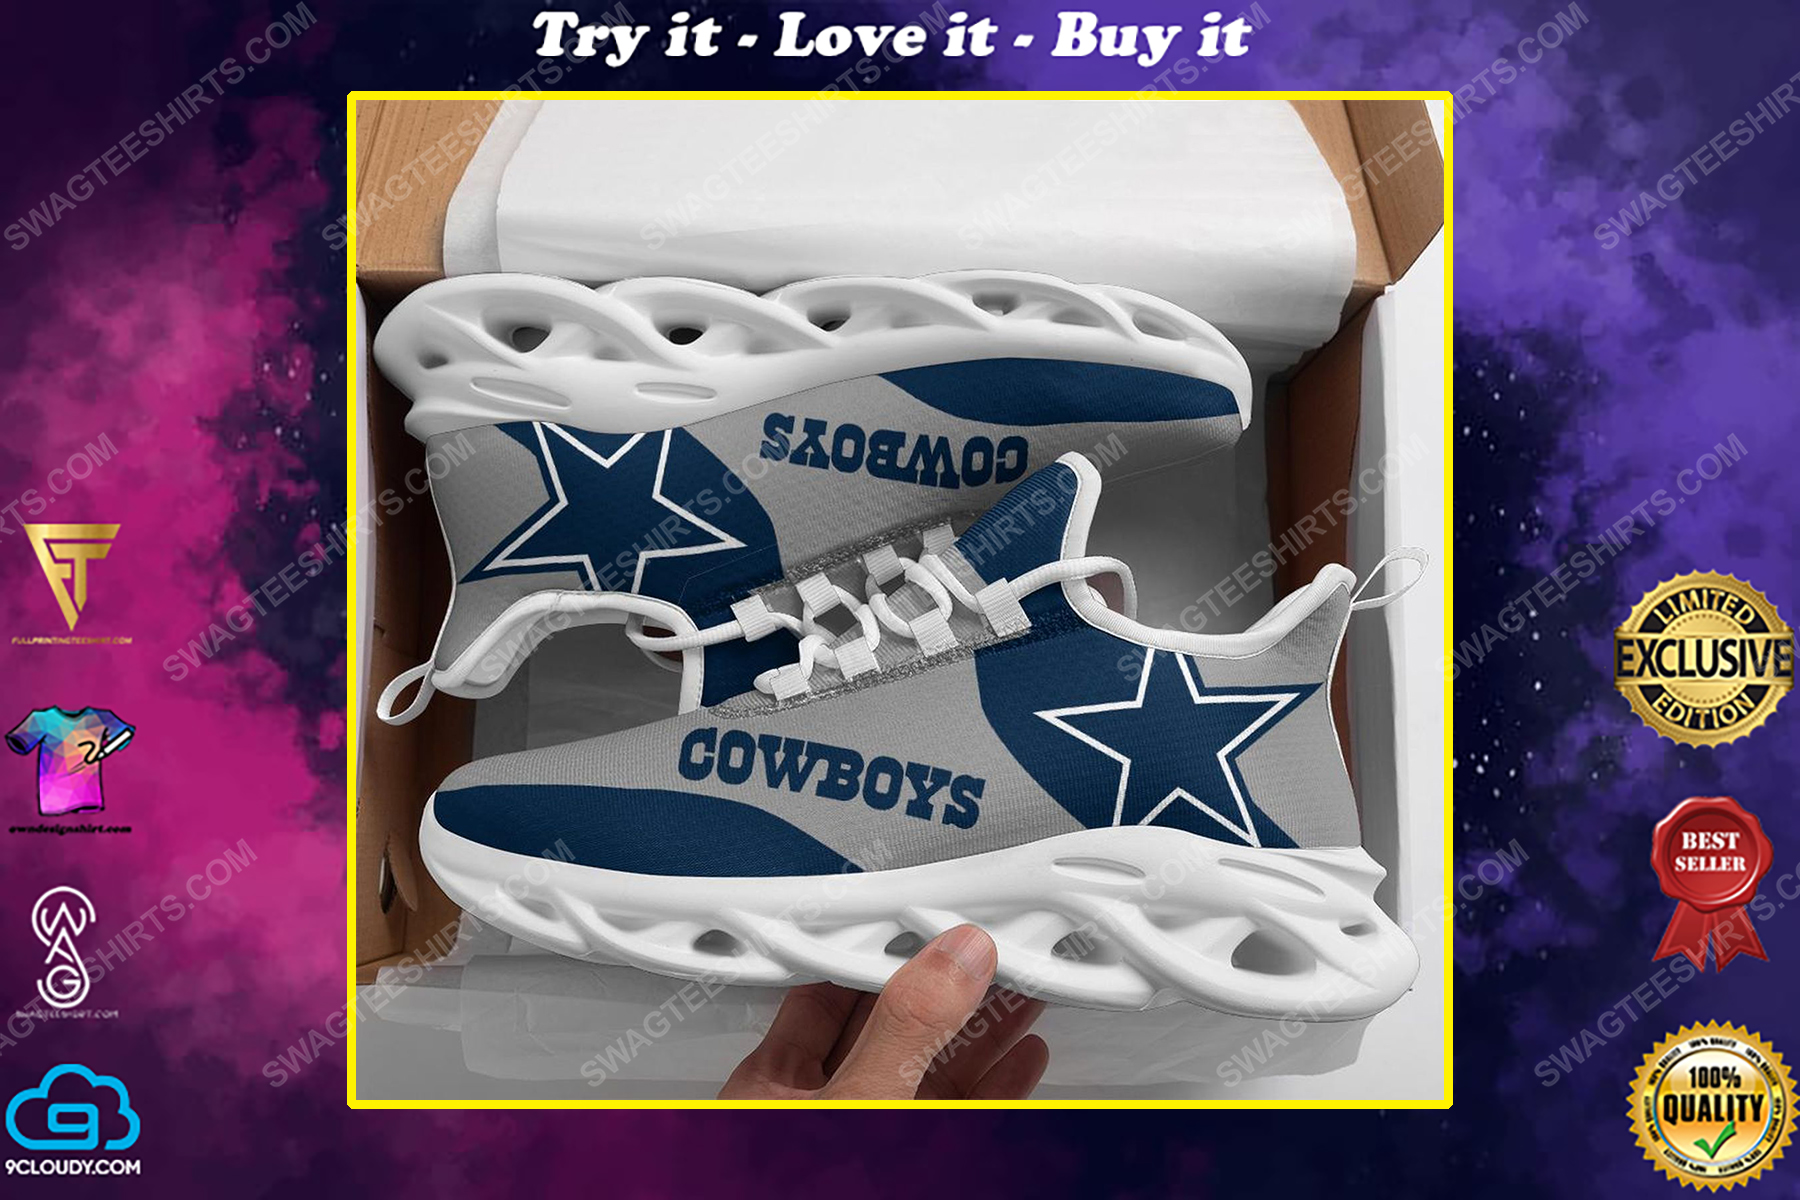 The dallas cowboys football team max soul shoes